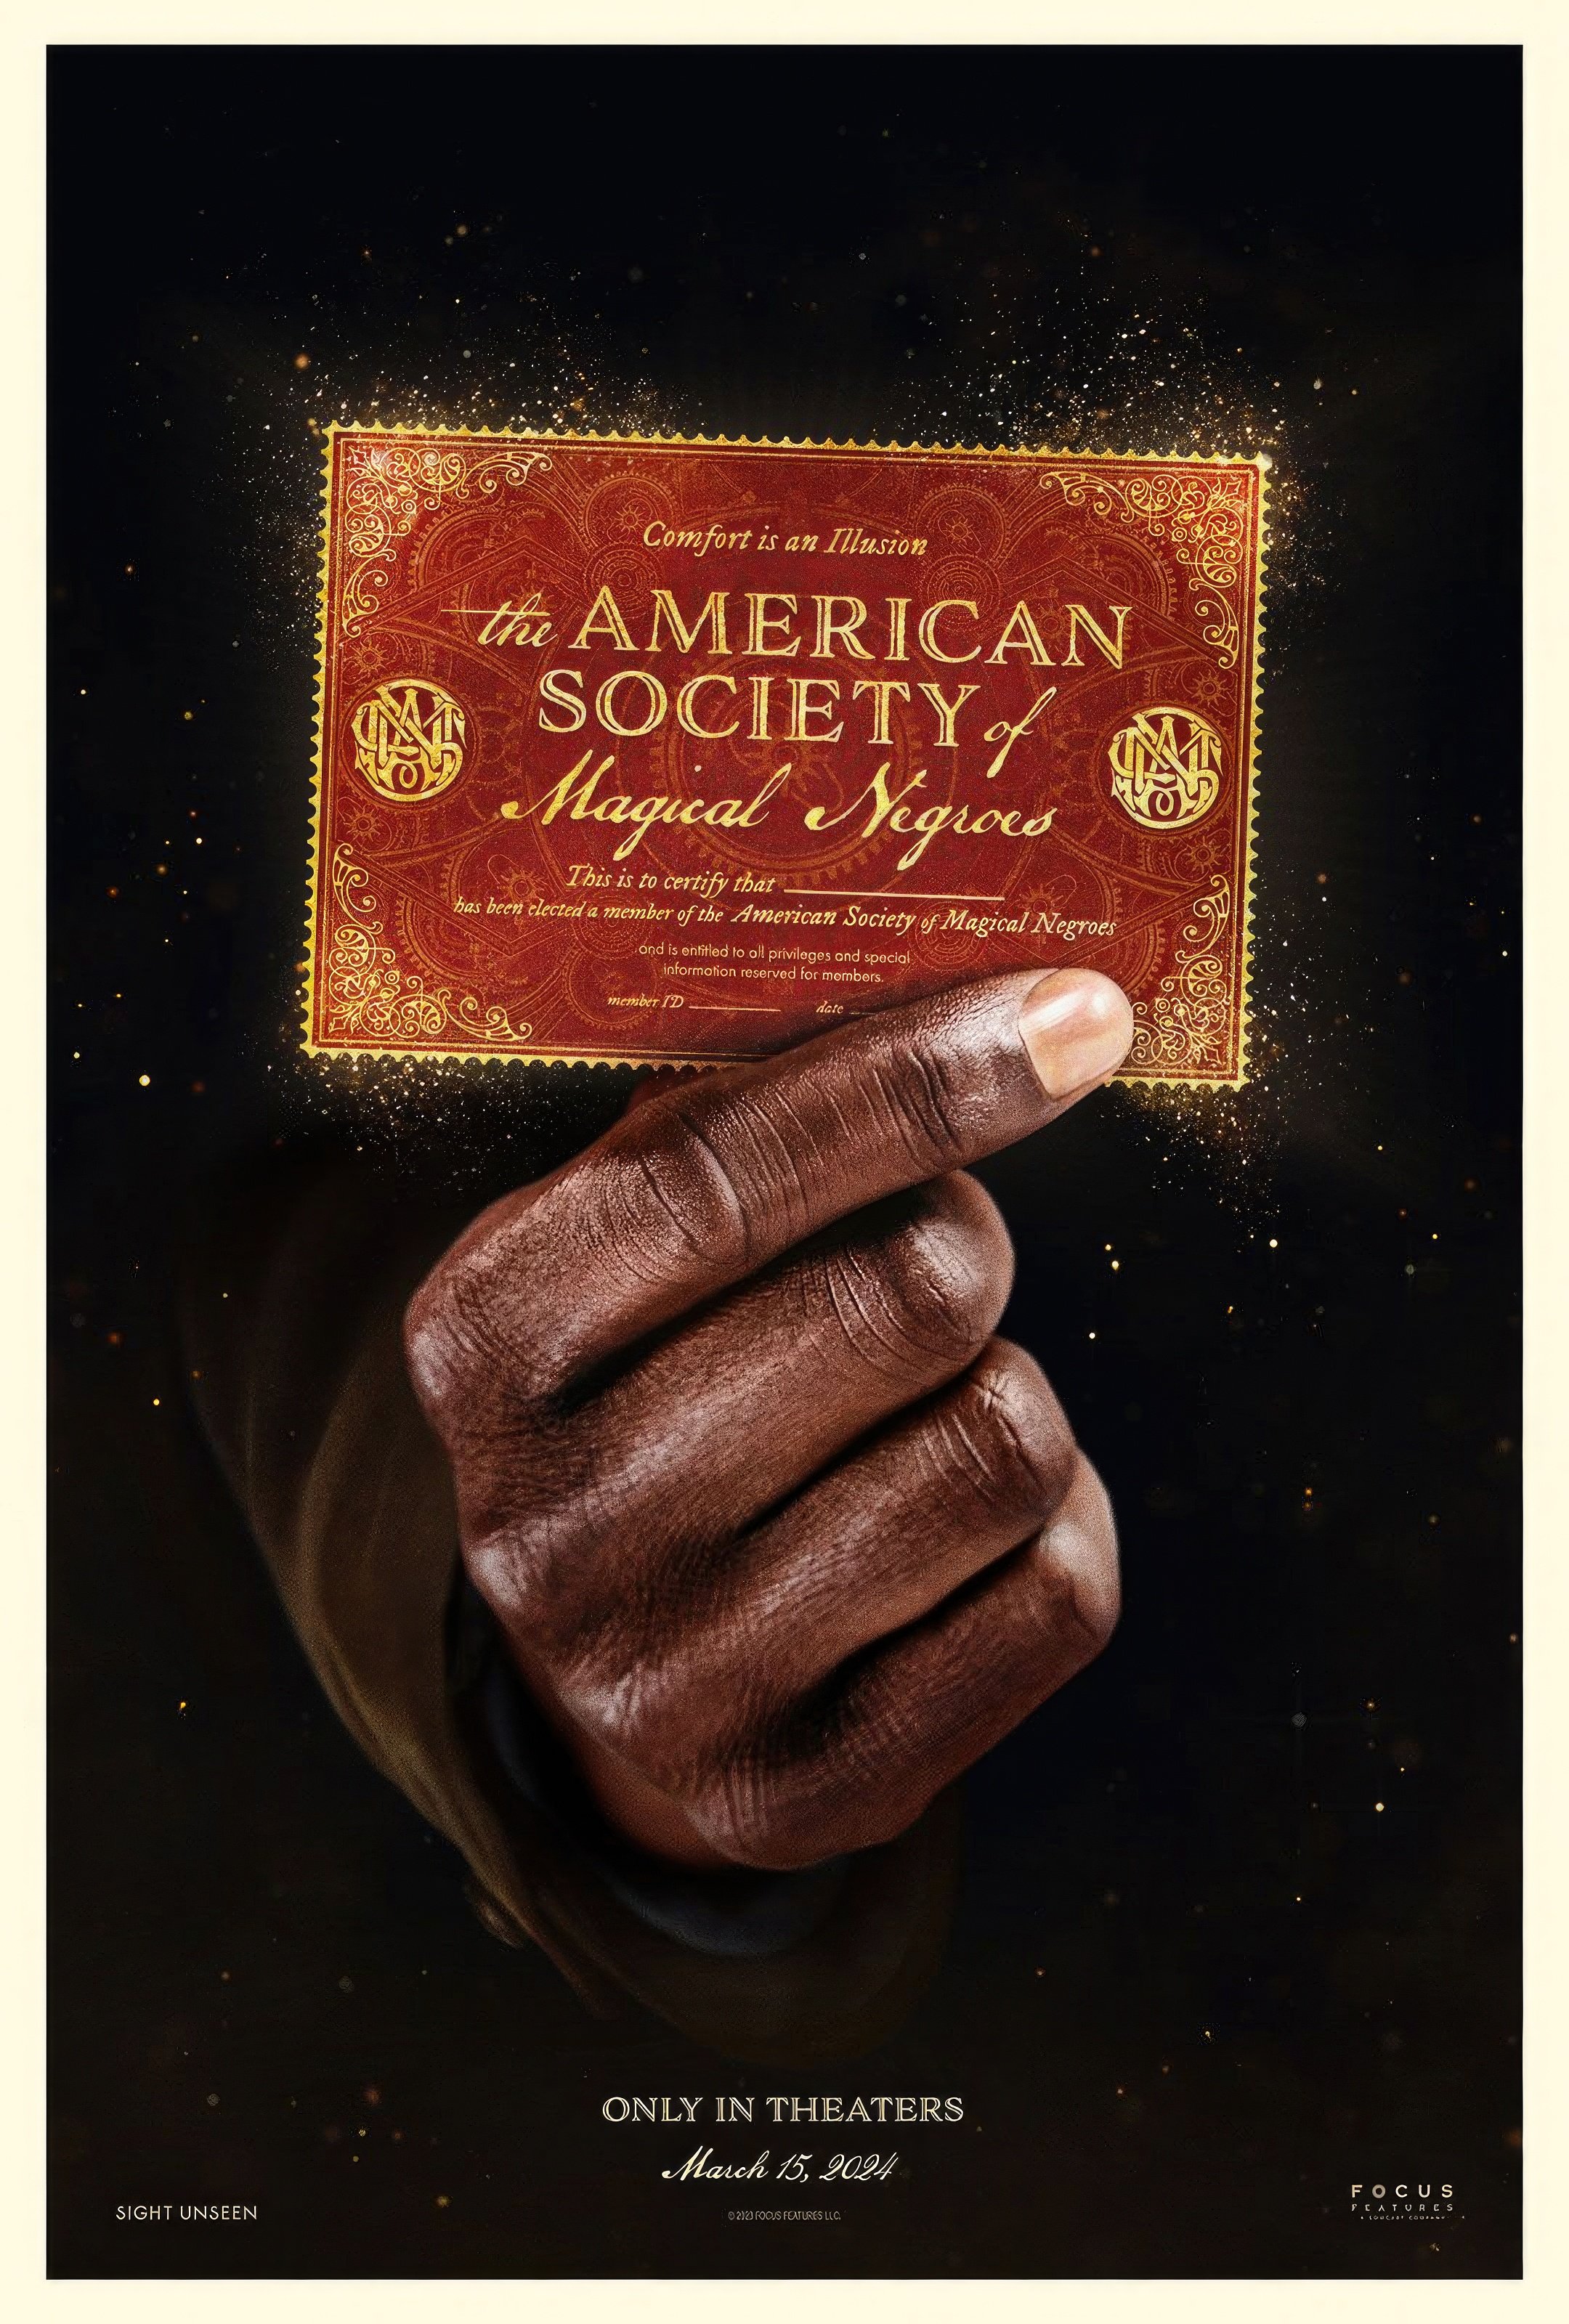 American Society Poster-large.jpg